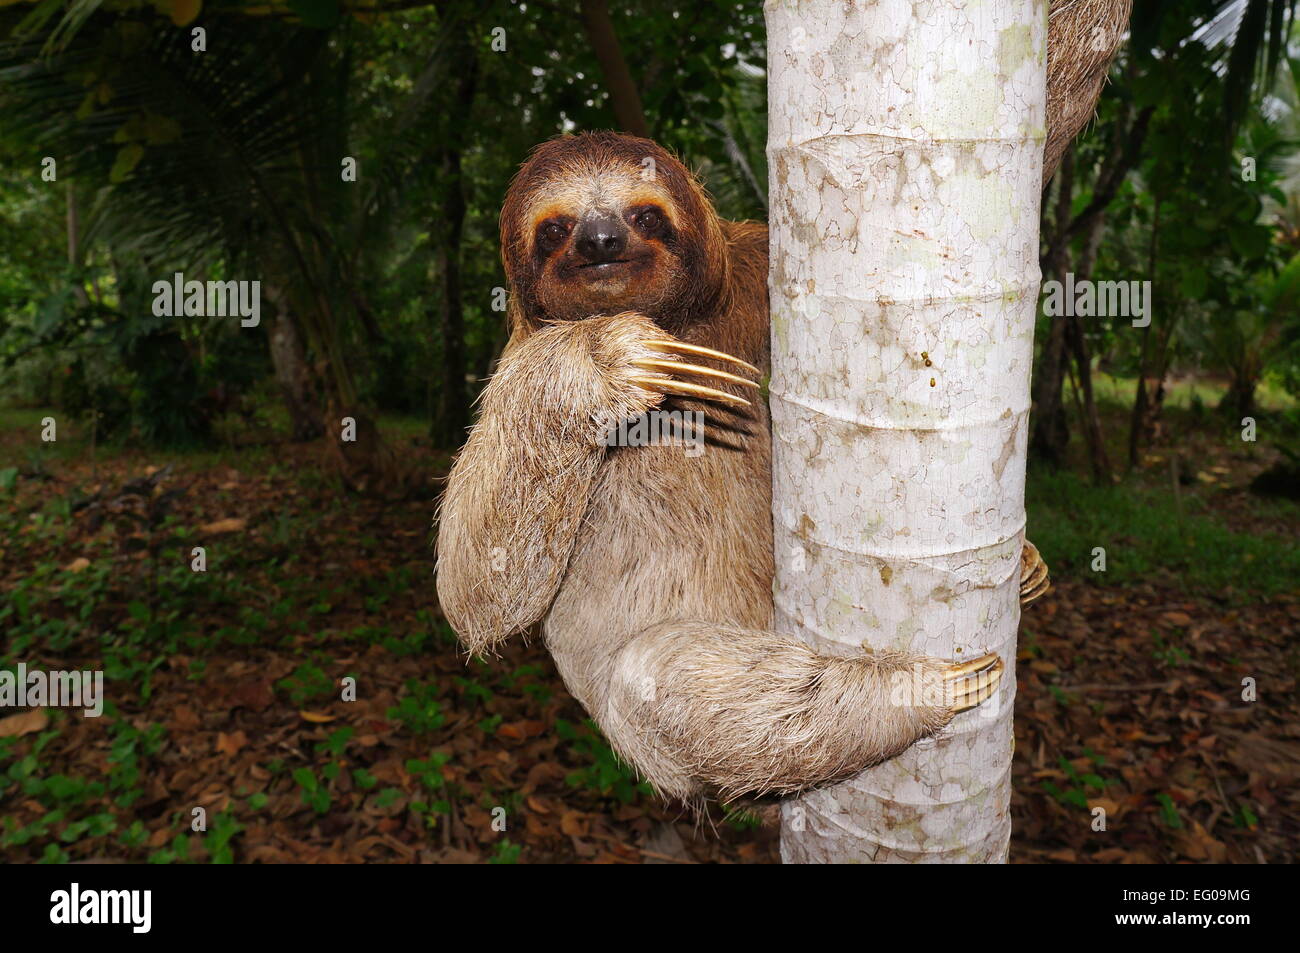 Three-toed sloth climbing on tree trunk, Panama, Central America Stock Photo